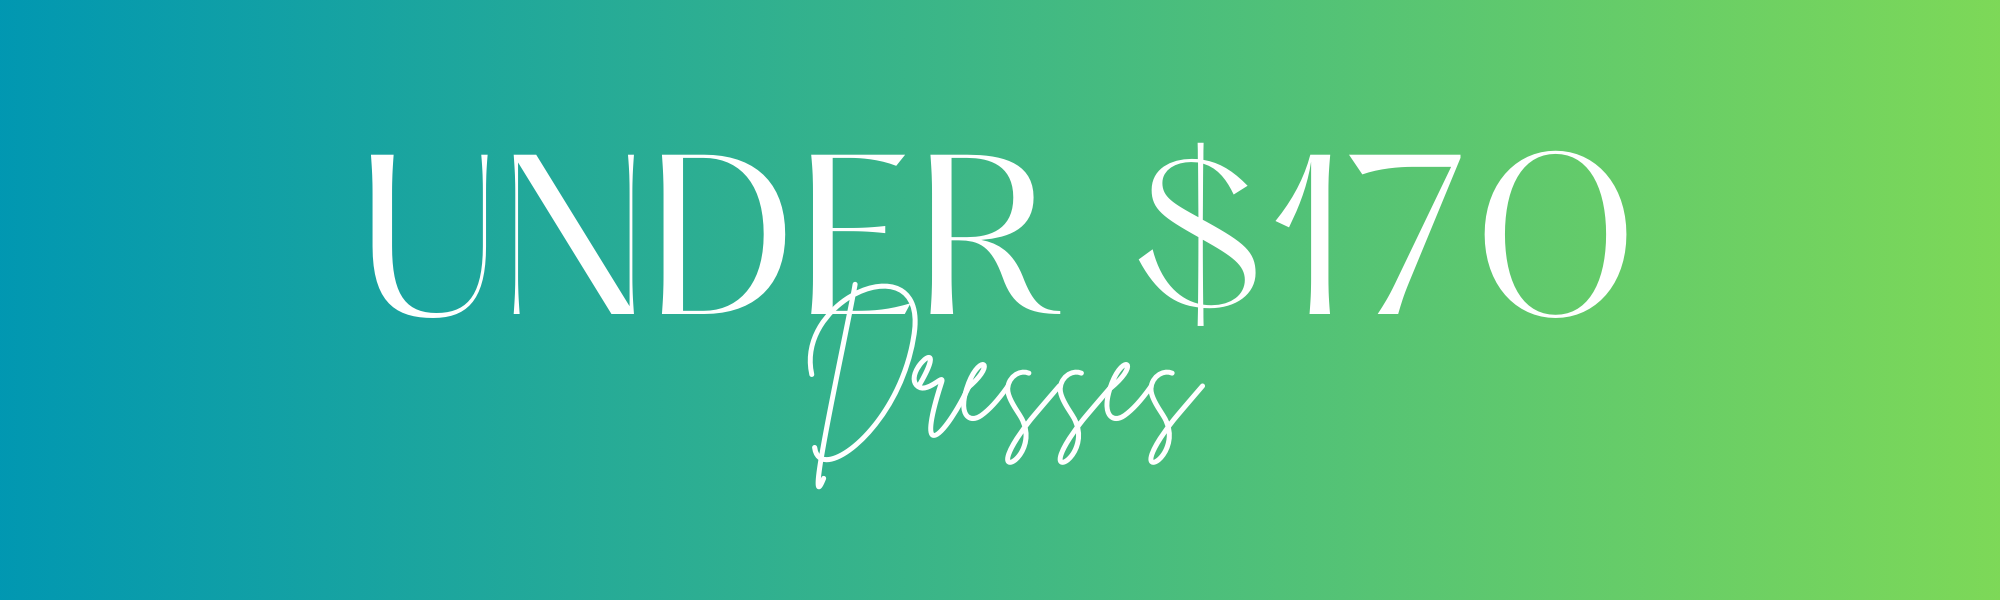 Women's Dresses Under $170